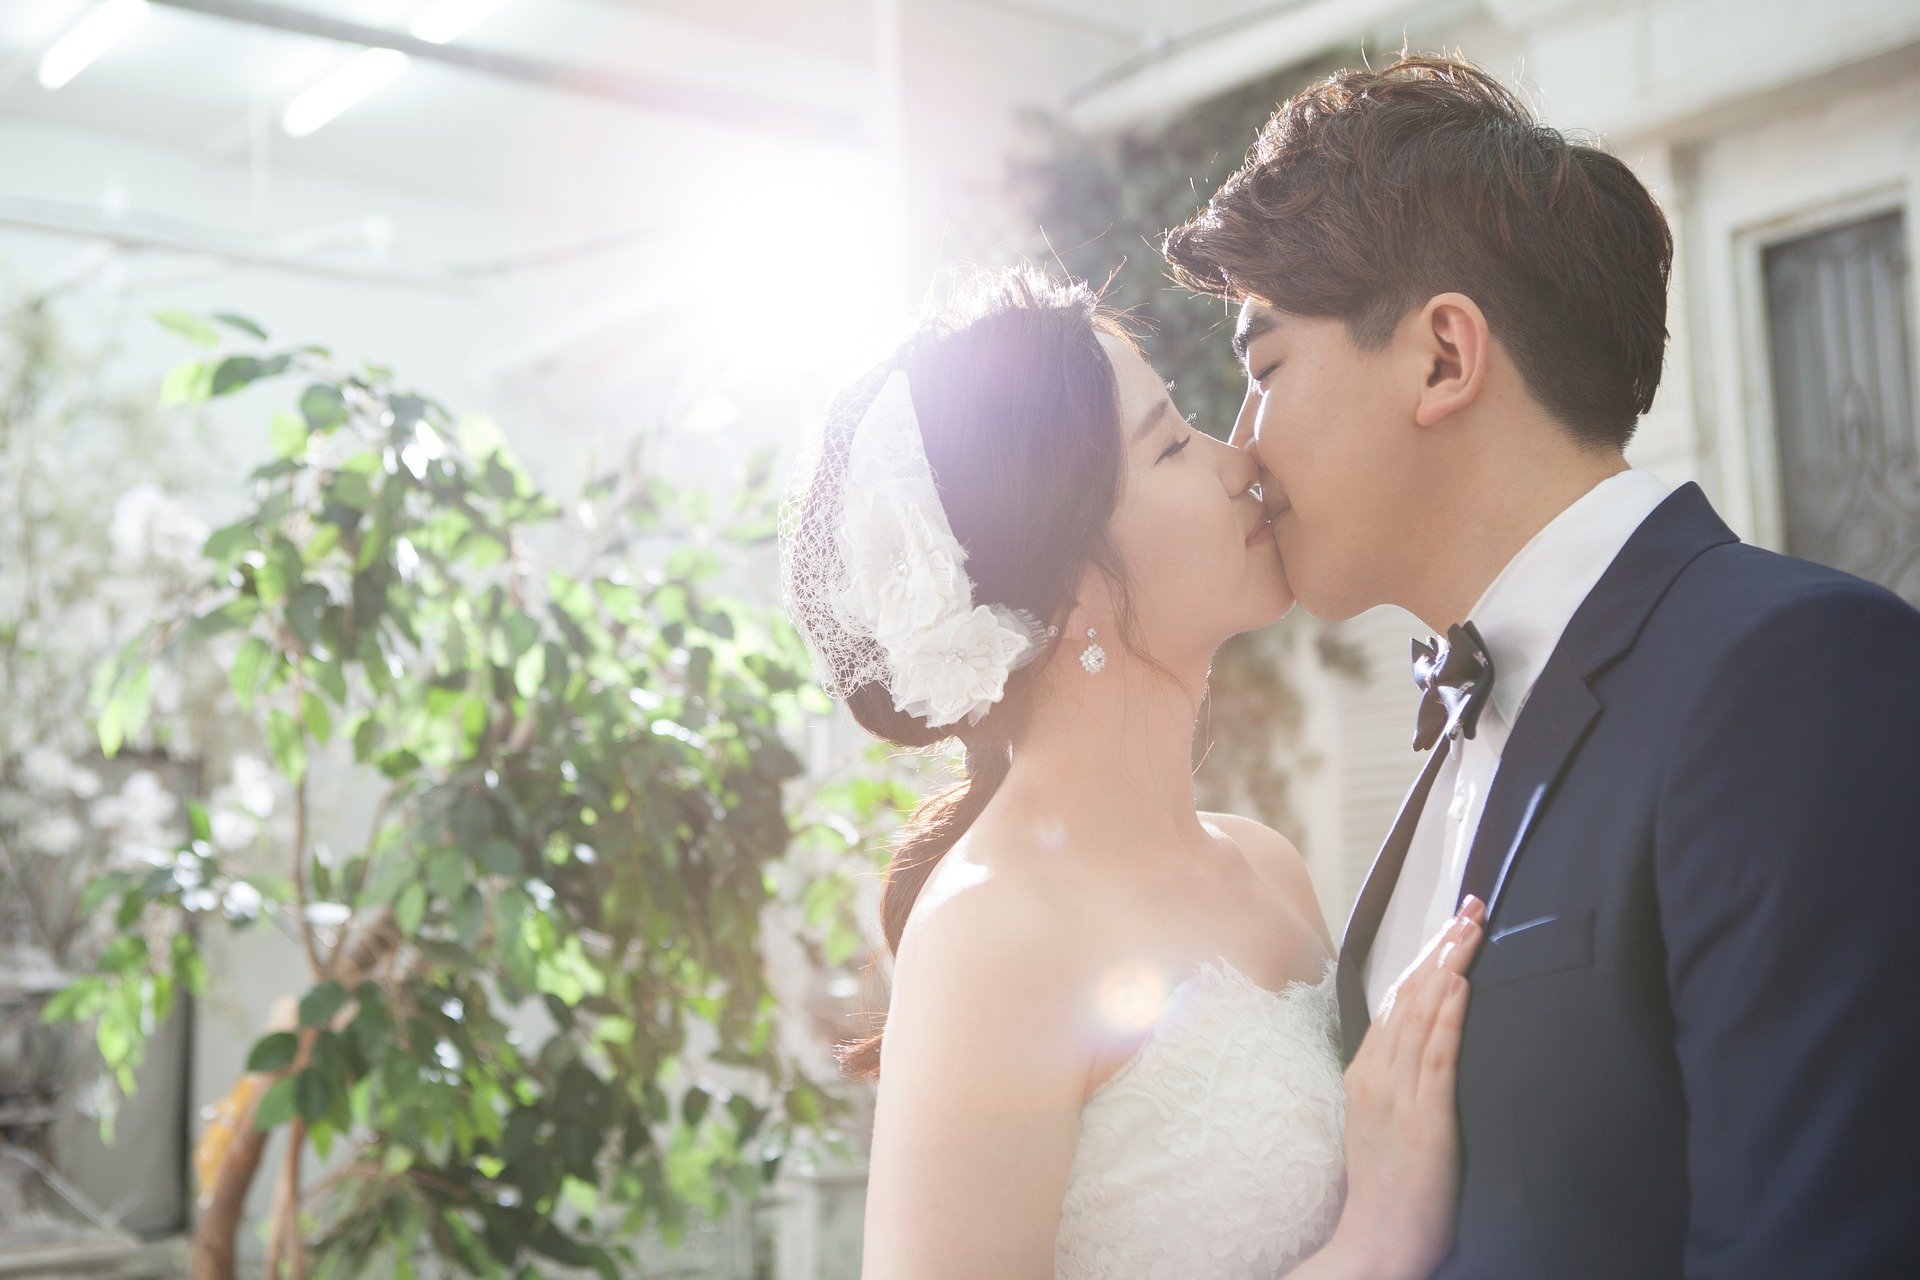 Bride and groom kissing. | Source: Pixabay